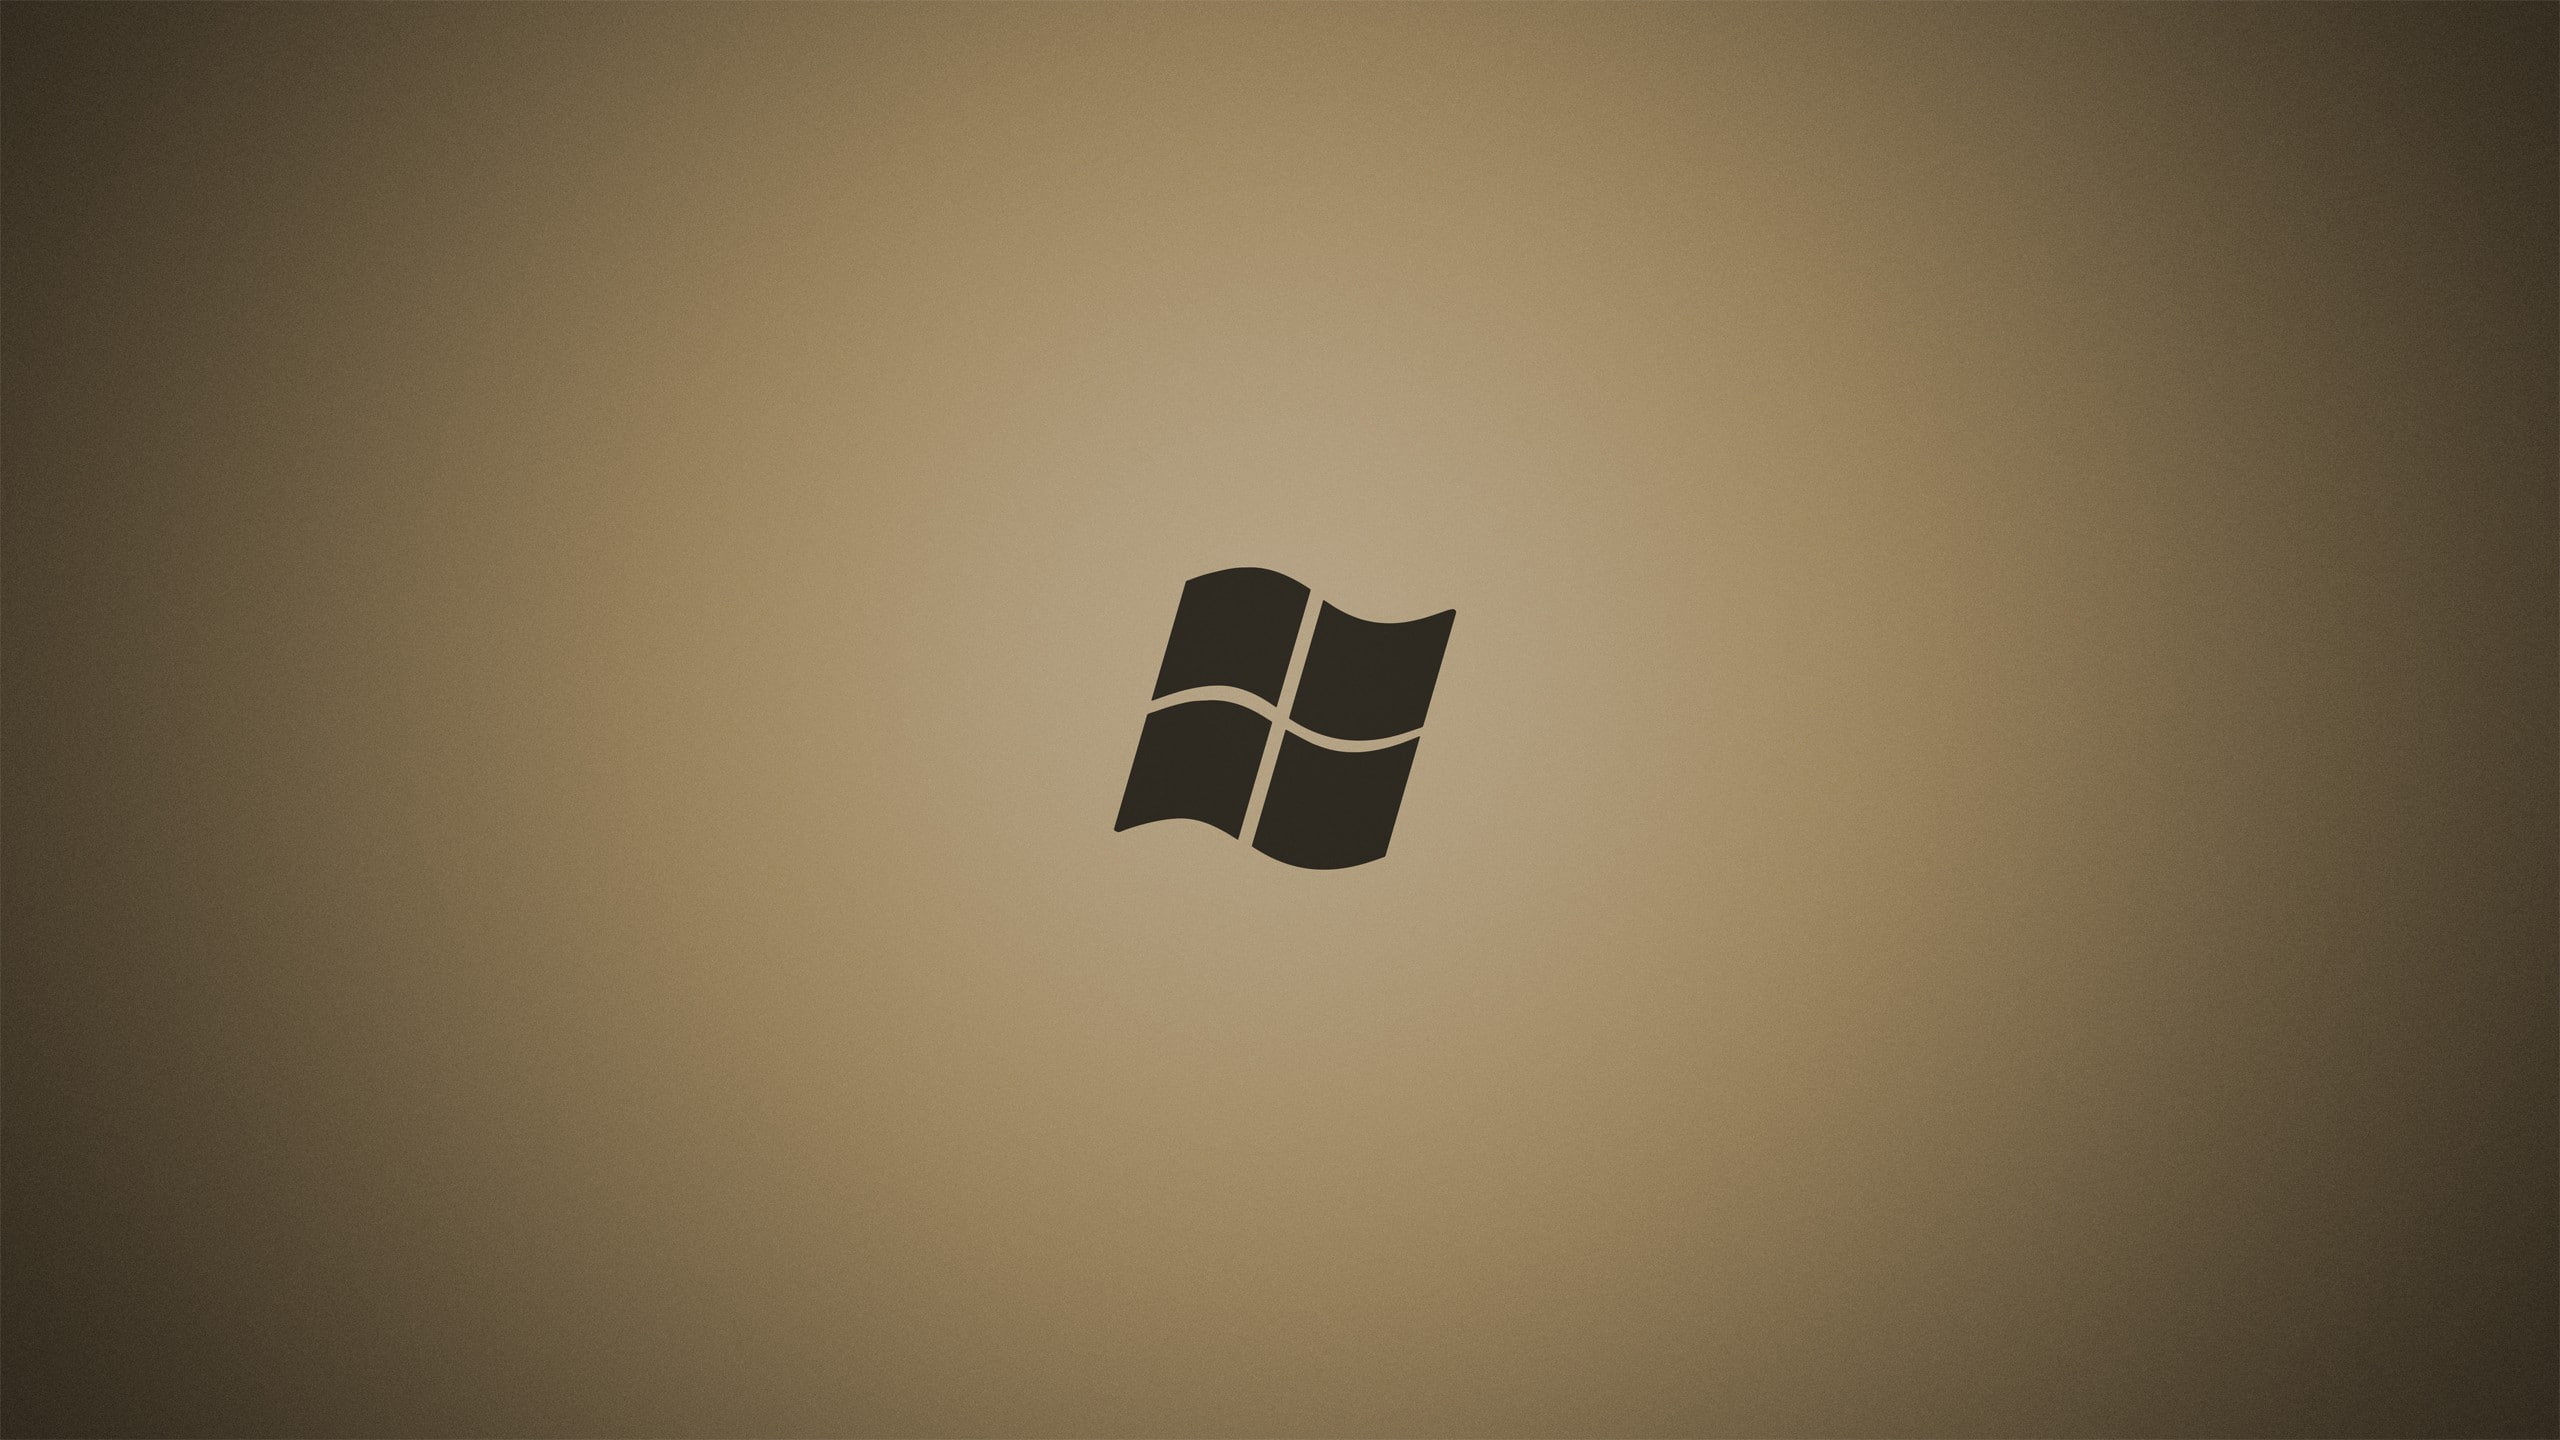 Windows 7, Microsoft Windows, Windows 8, minimalism